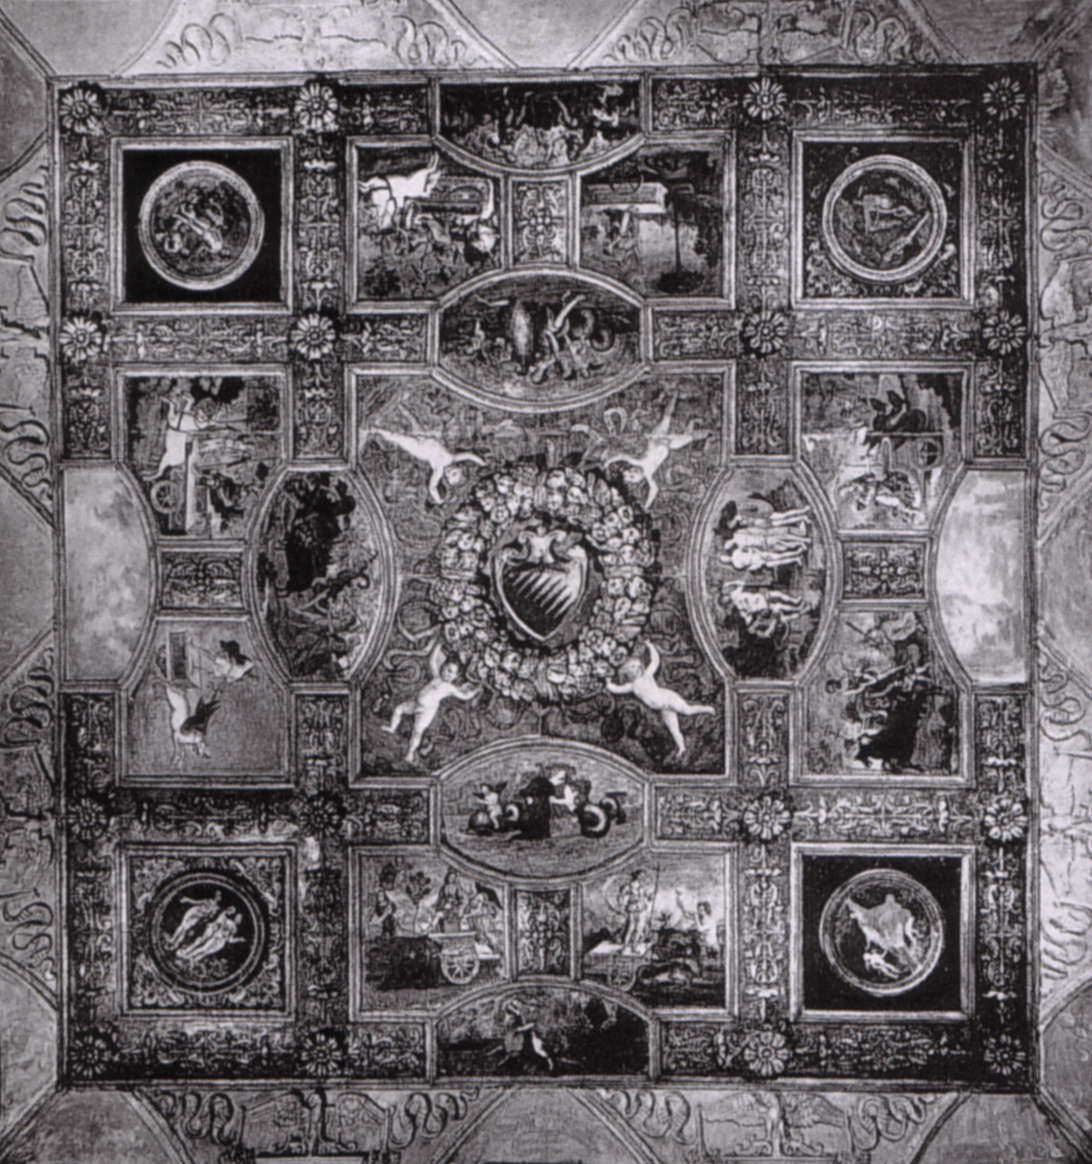 Pinturicchio's ceiling before dismemberment